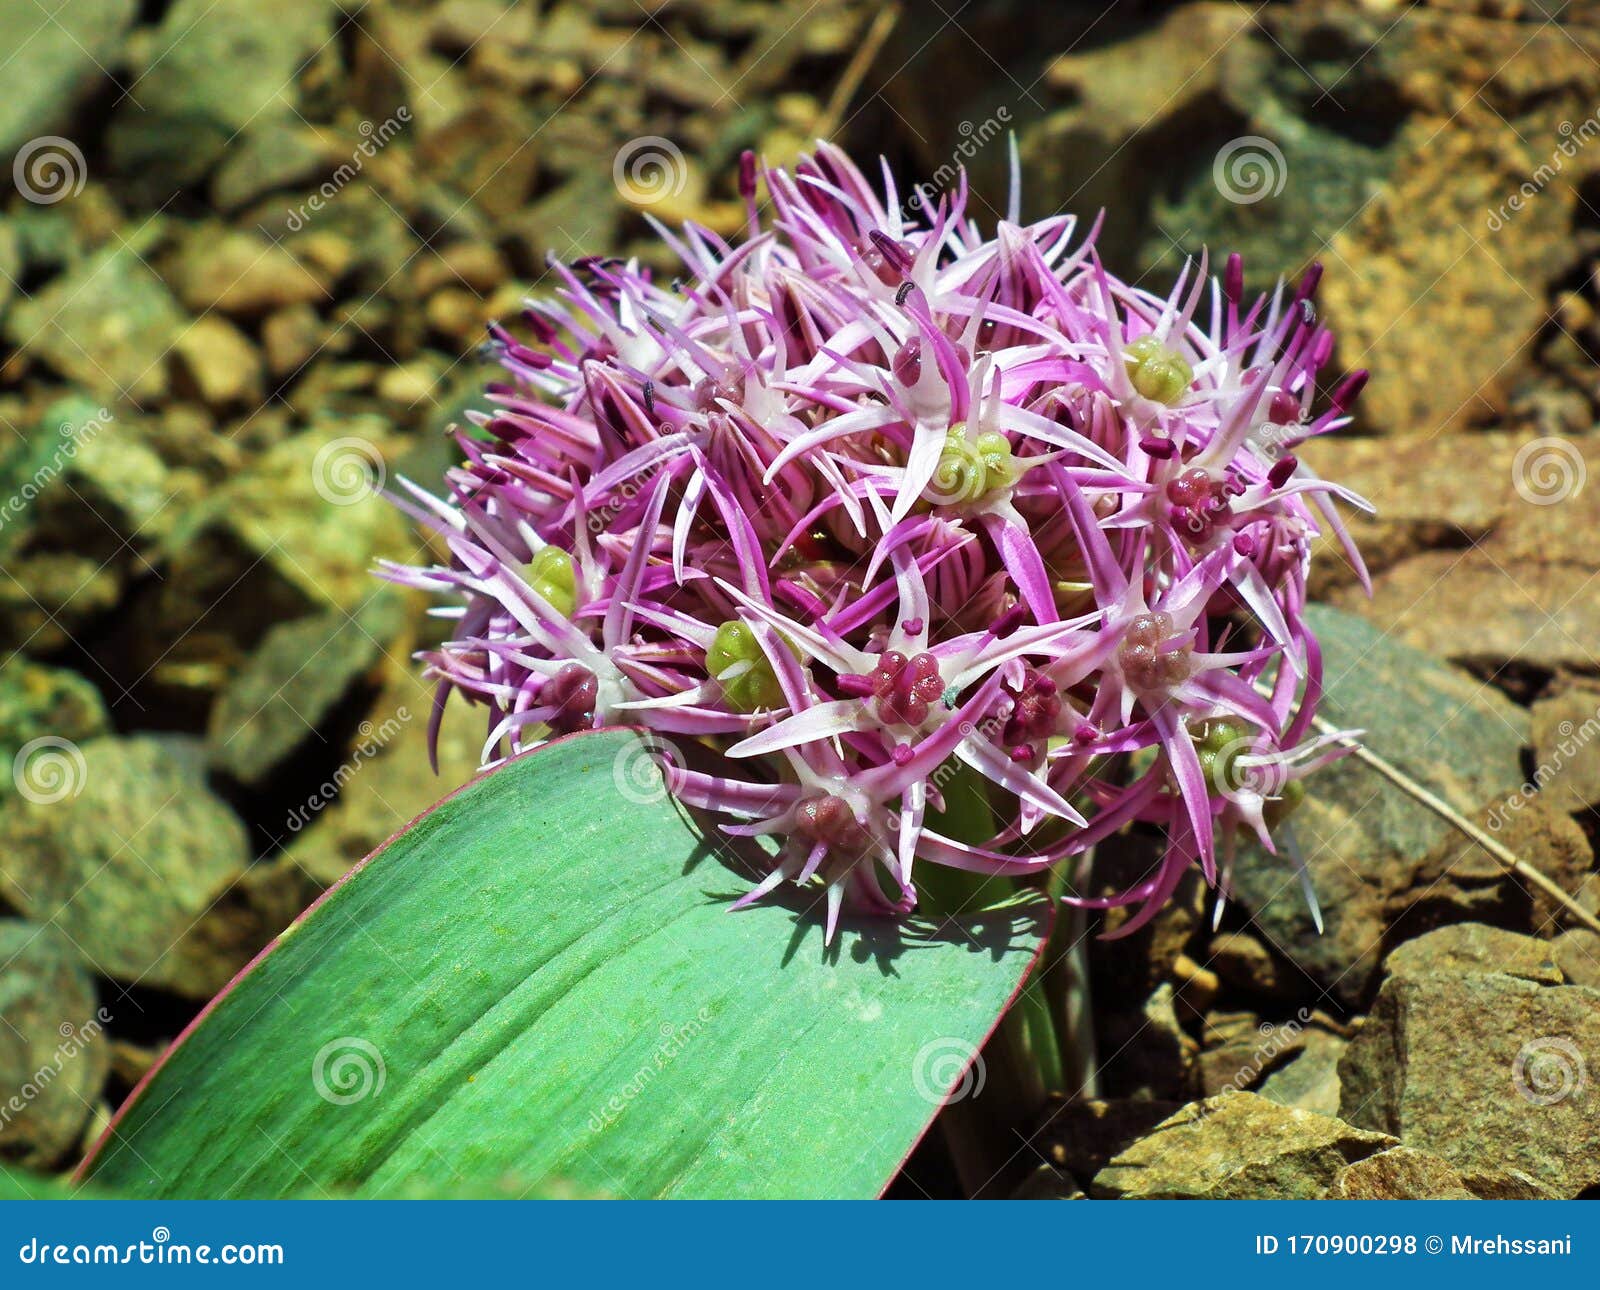 TÌNH YÊU CÂY CỎ ĐV 8  - Page 98 Allium-elburzense-flower-allium-elburzense-flower-endemic-iranian-plant-which-grows-alburz-mountains-170900298